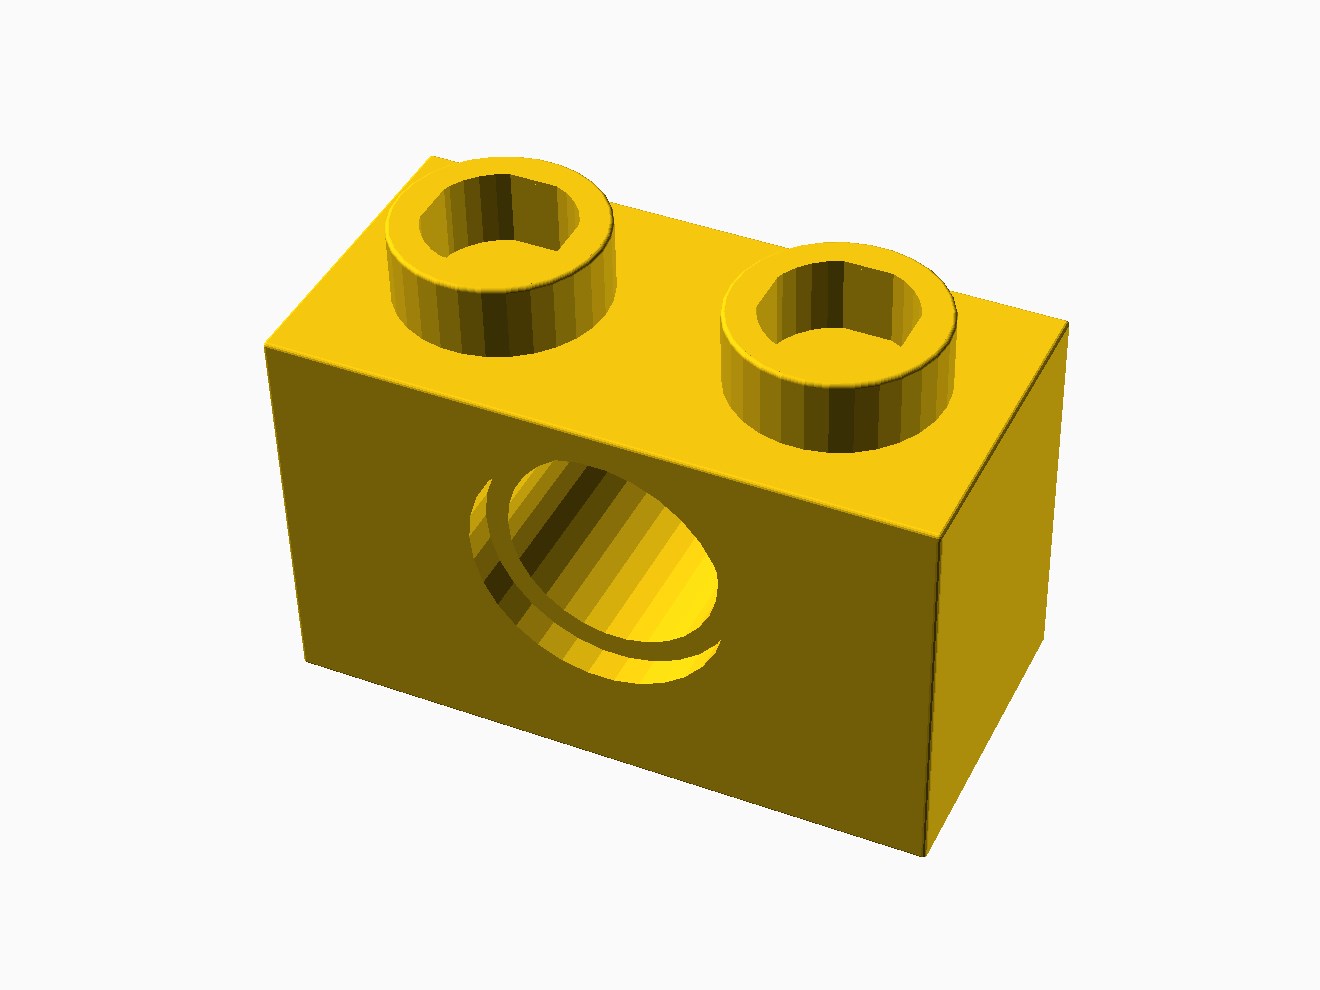 3D printable model of a LEGO Technic 2x1 Brick.